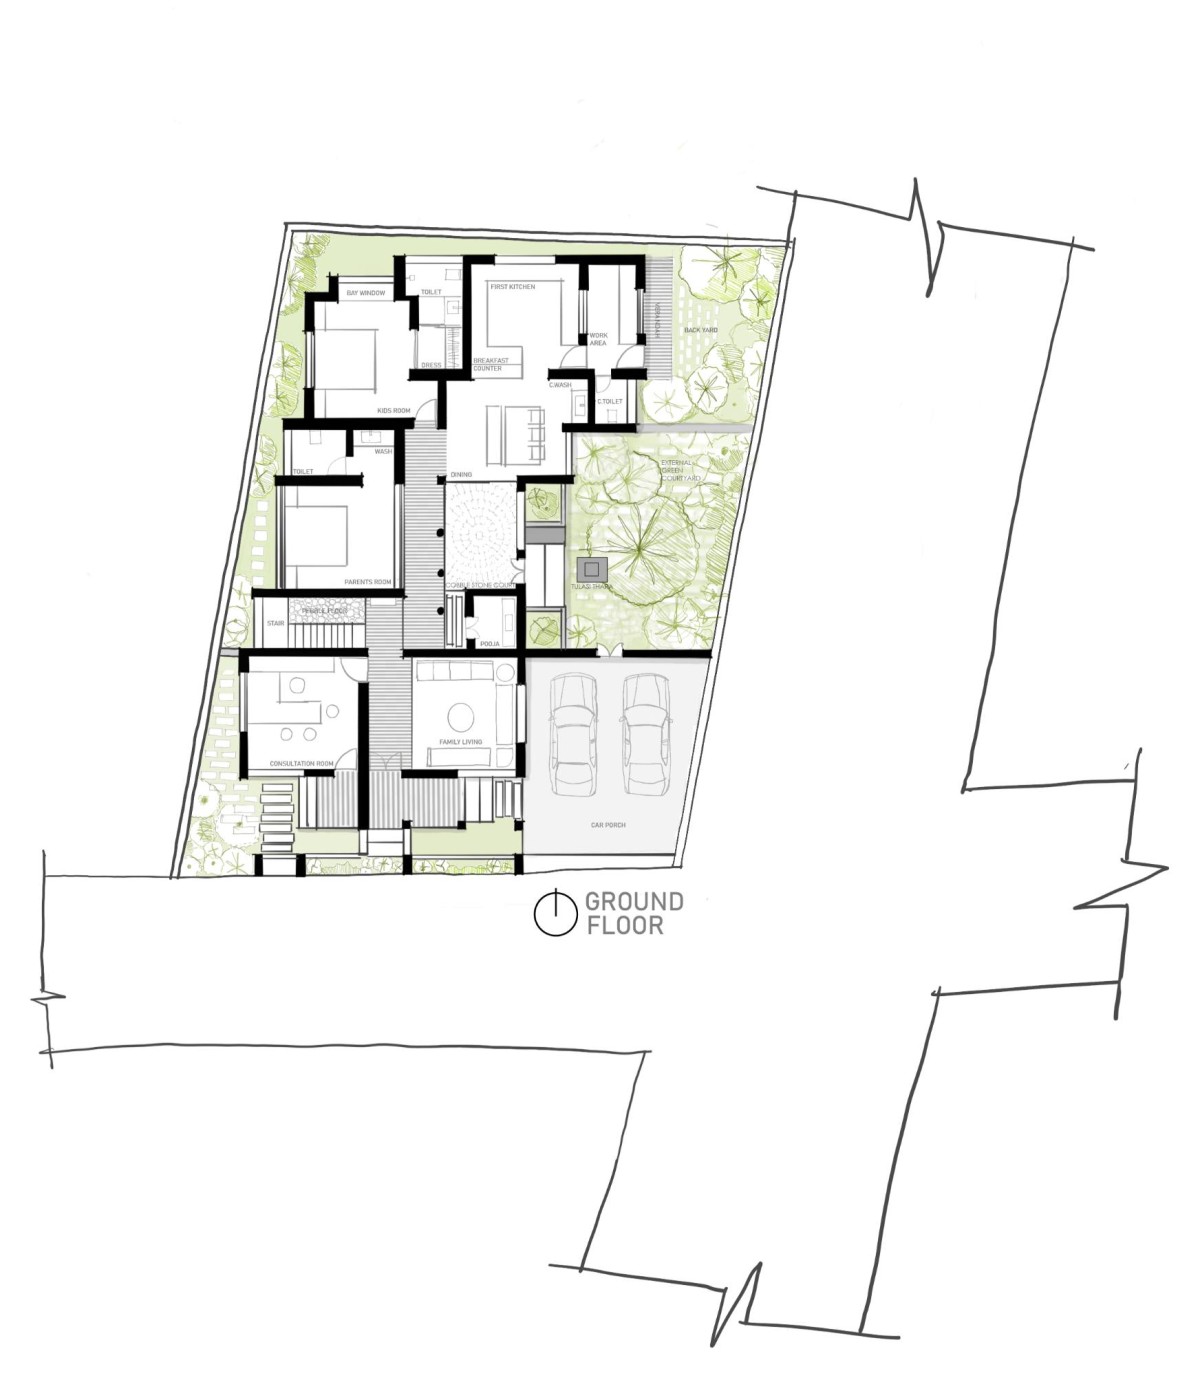 Ground Floor Plan of Sarada Vihar by 7th Hue Architecture Studio